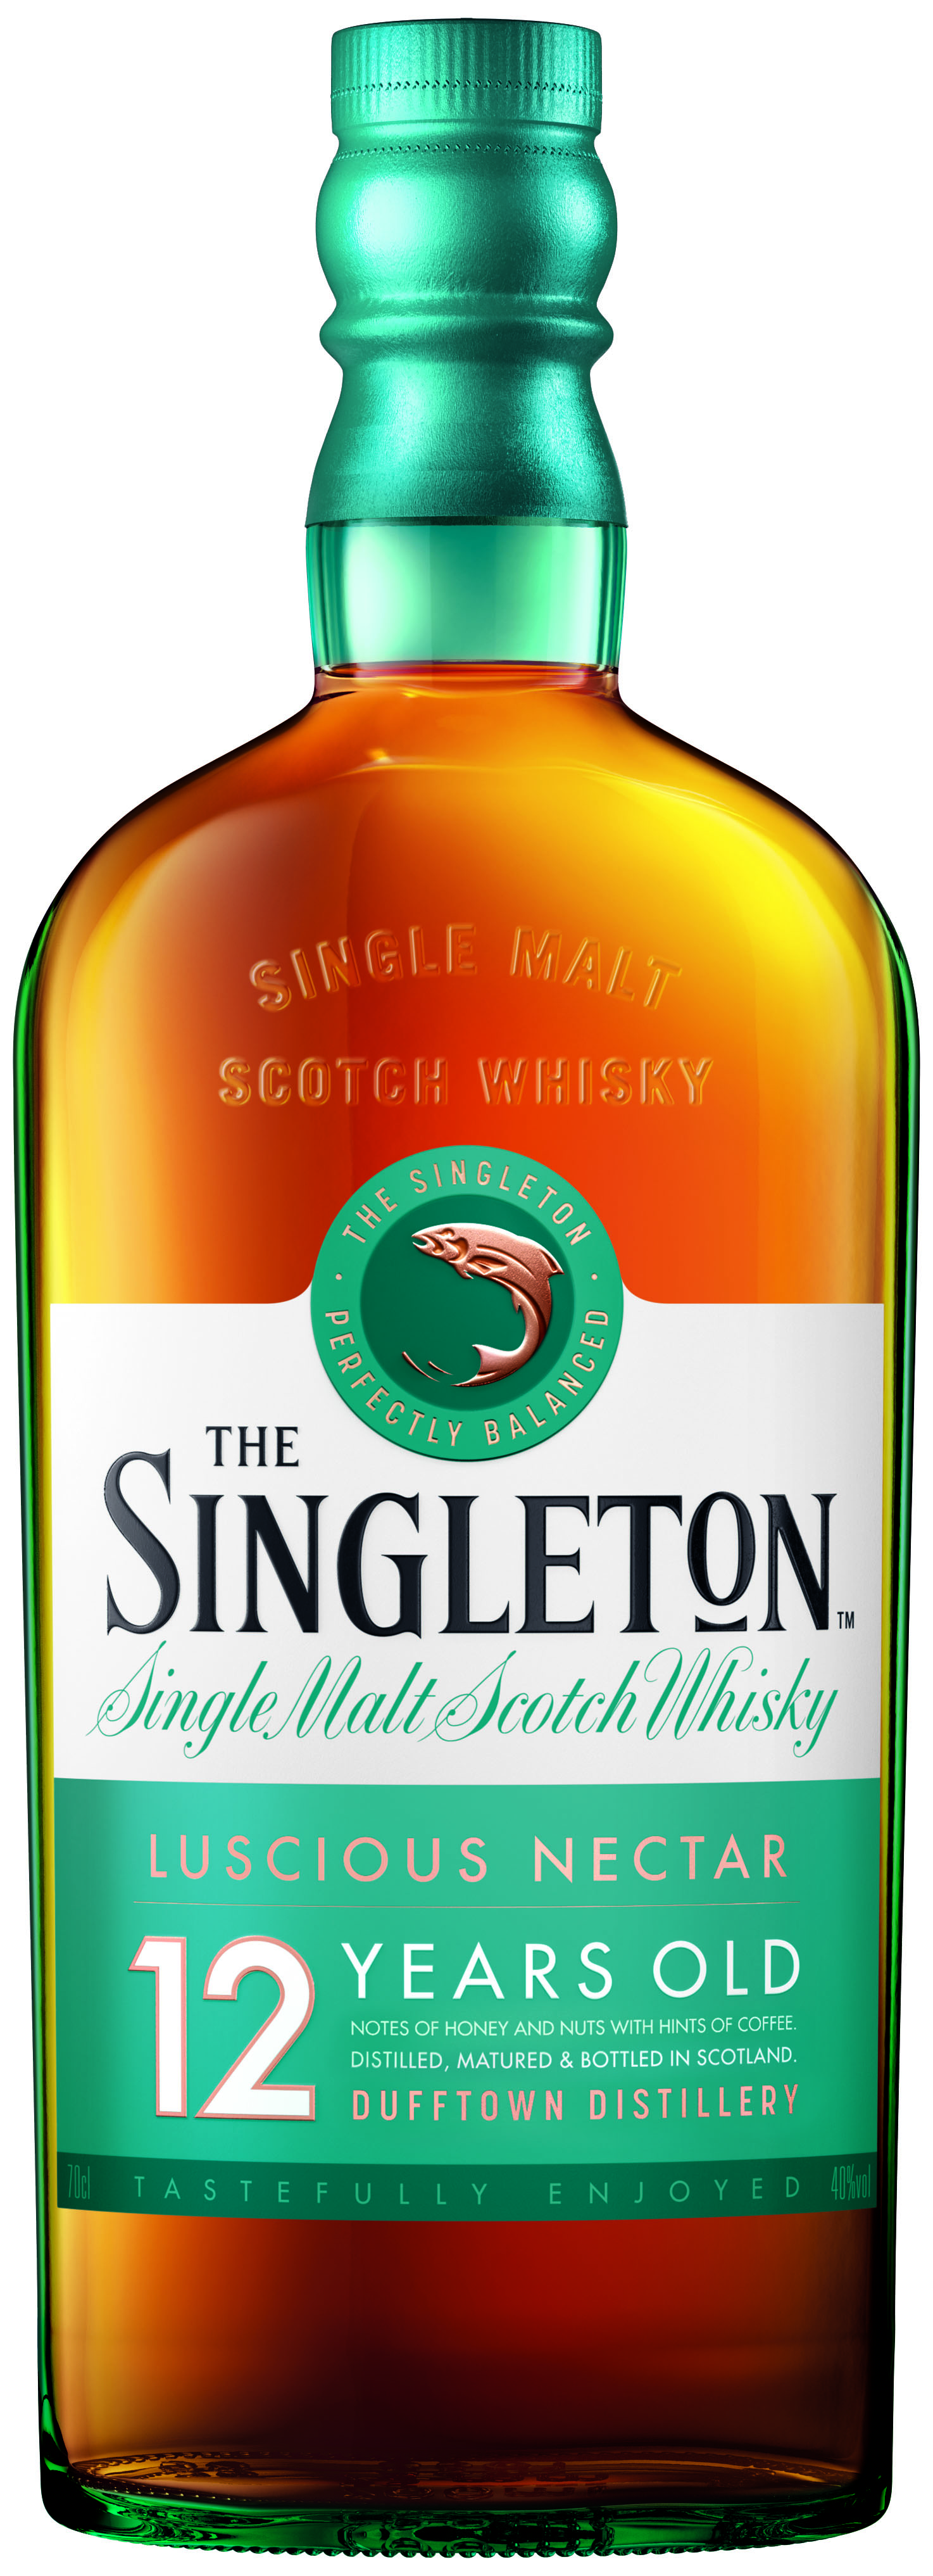 The Singleton of Dufftown 12 Jahre Single Malt Scotch Whisky